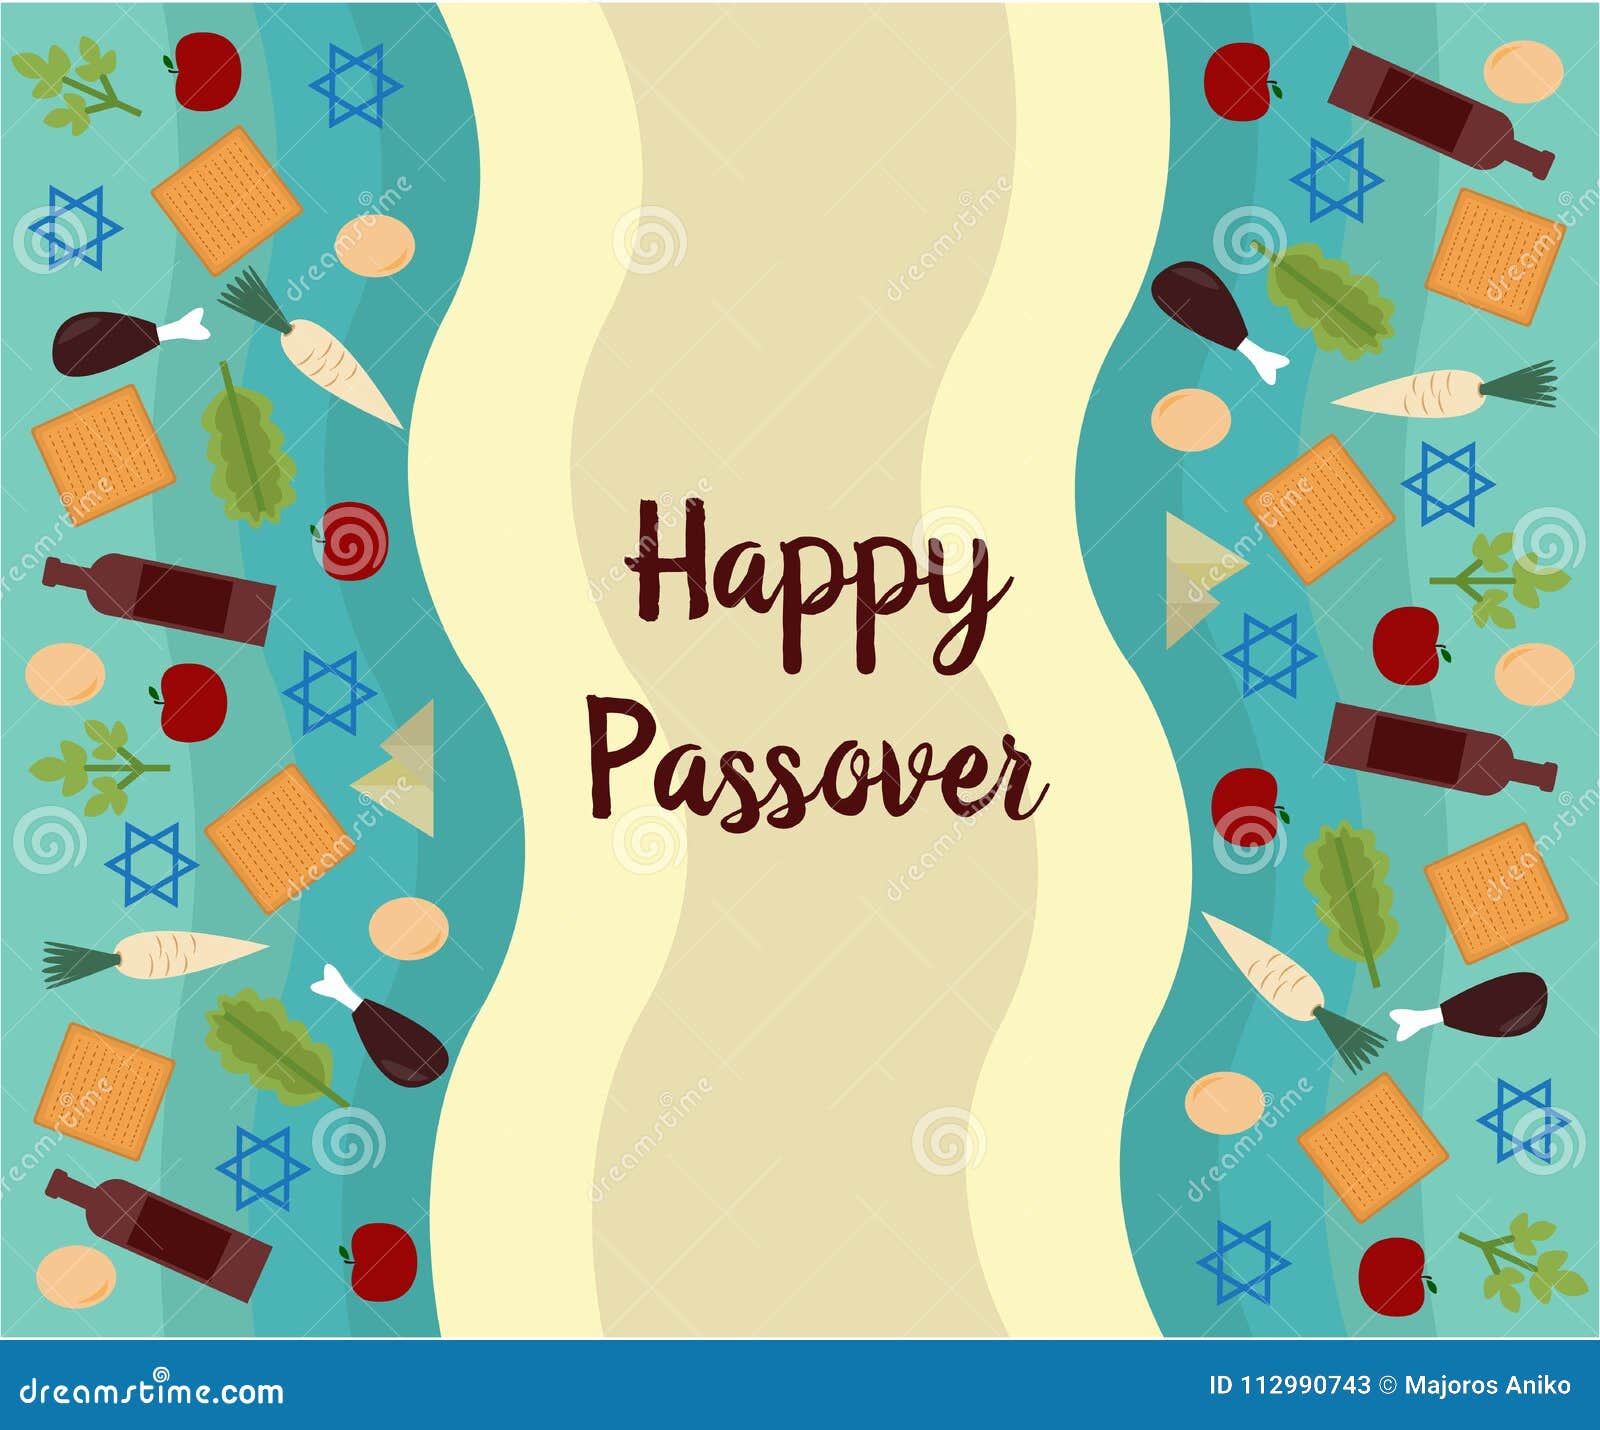 Happy Passover holiday stock vector. Illustration of celebration ...